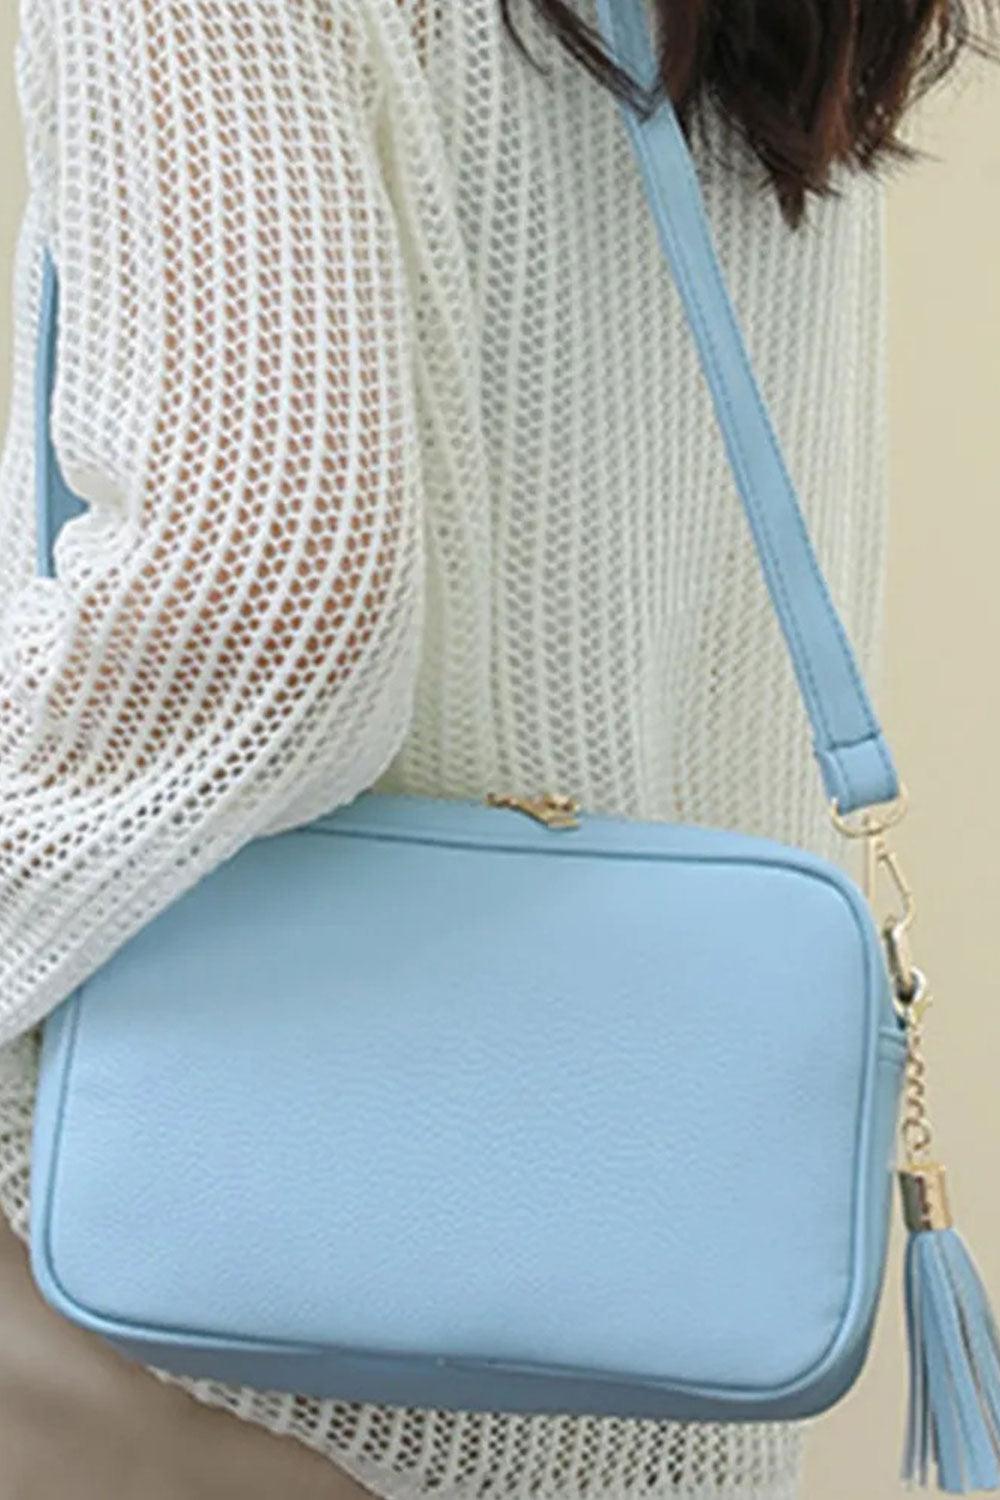 Tassel PU Leather Crossbody Bag - Pastel Blue - Daily Fashion